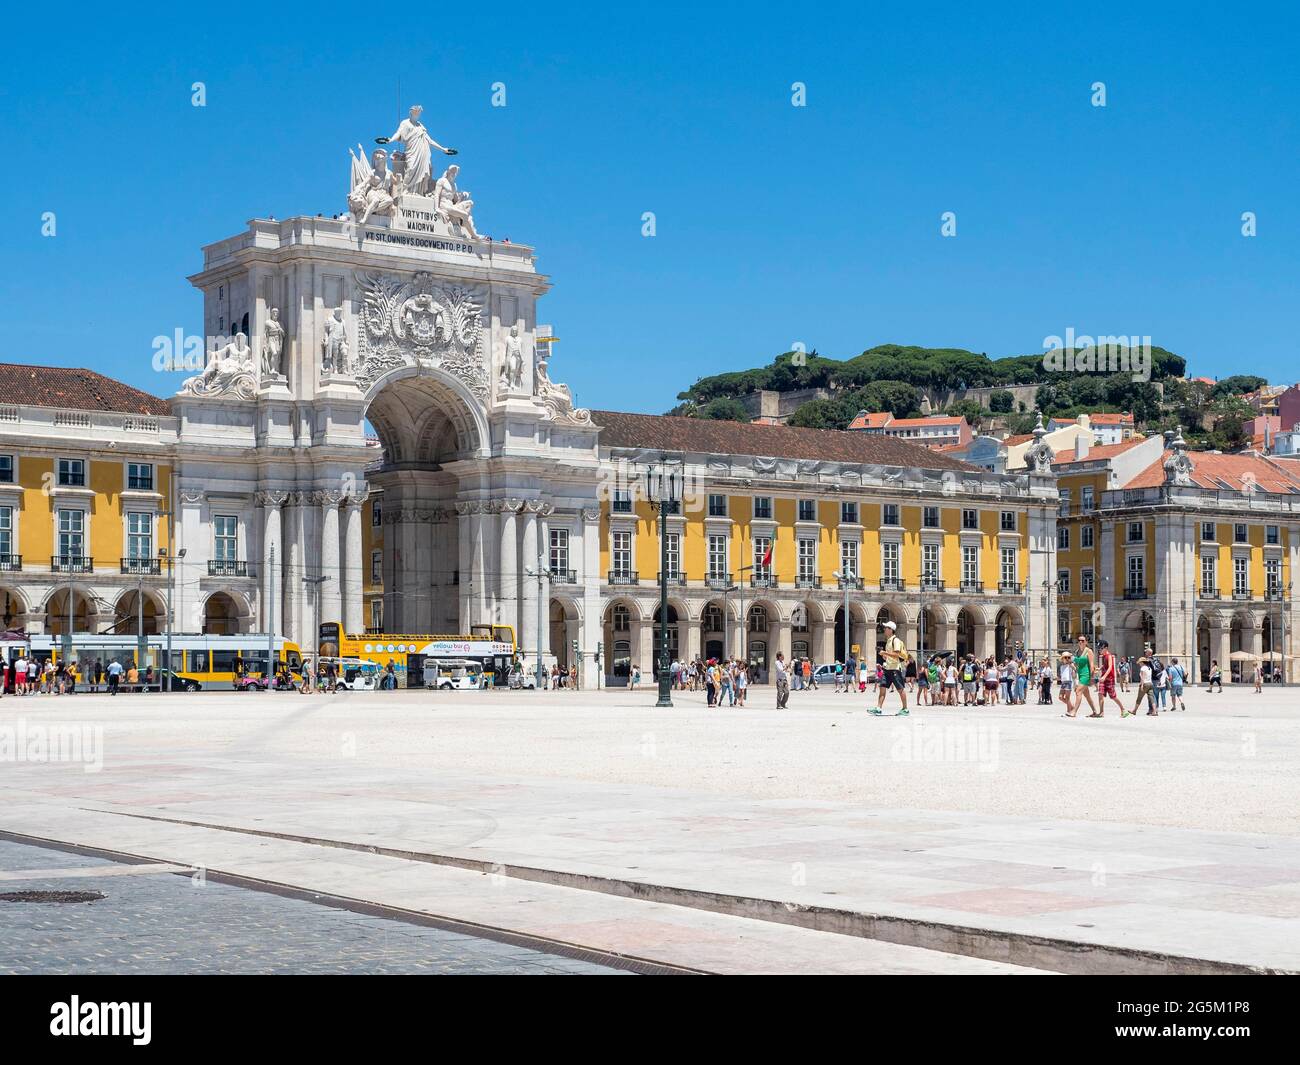 Commercial Square, Praça do Comercio, Triumphal Arch Arco da Rua Augusta with Ministry of Justice, Baixa, Lisbon, Portugal, Europe Stock Photo